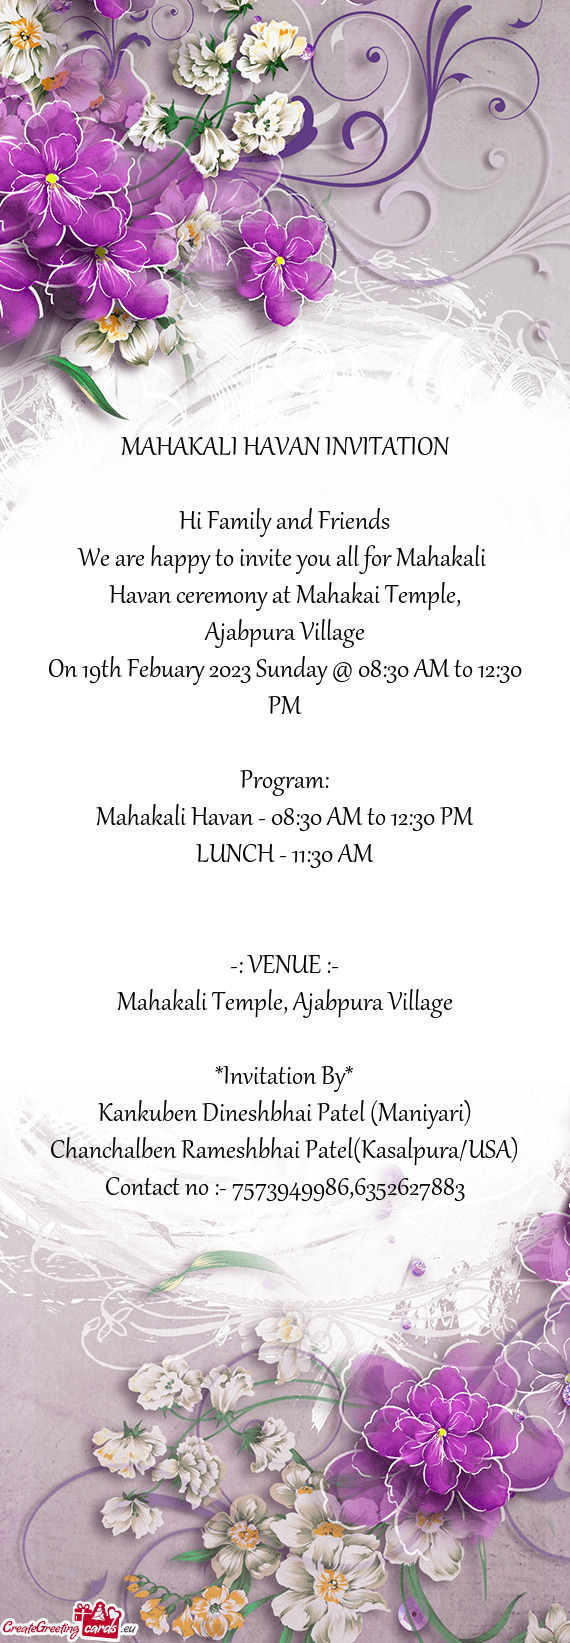 MAHAKALI HAVAN INVITATION